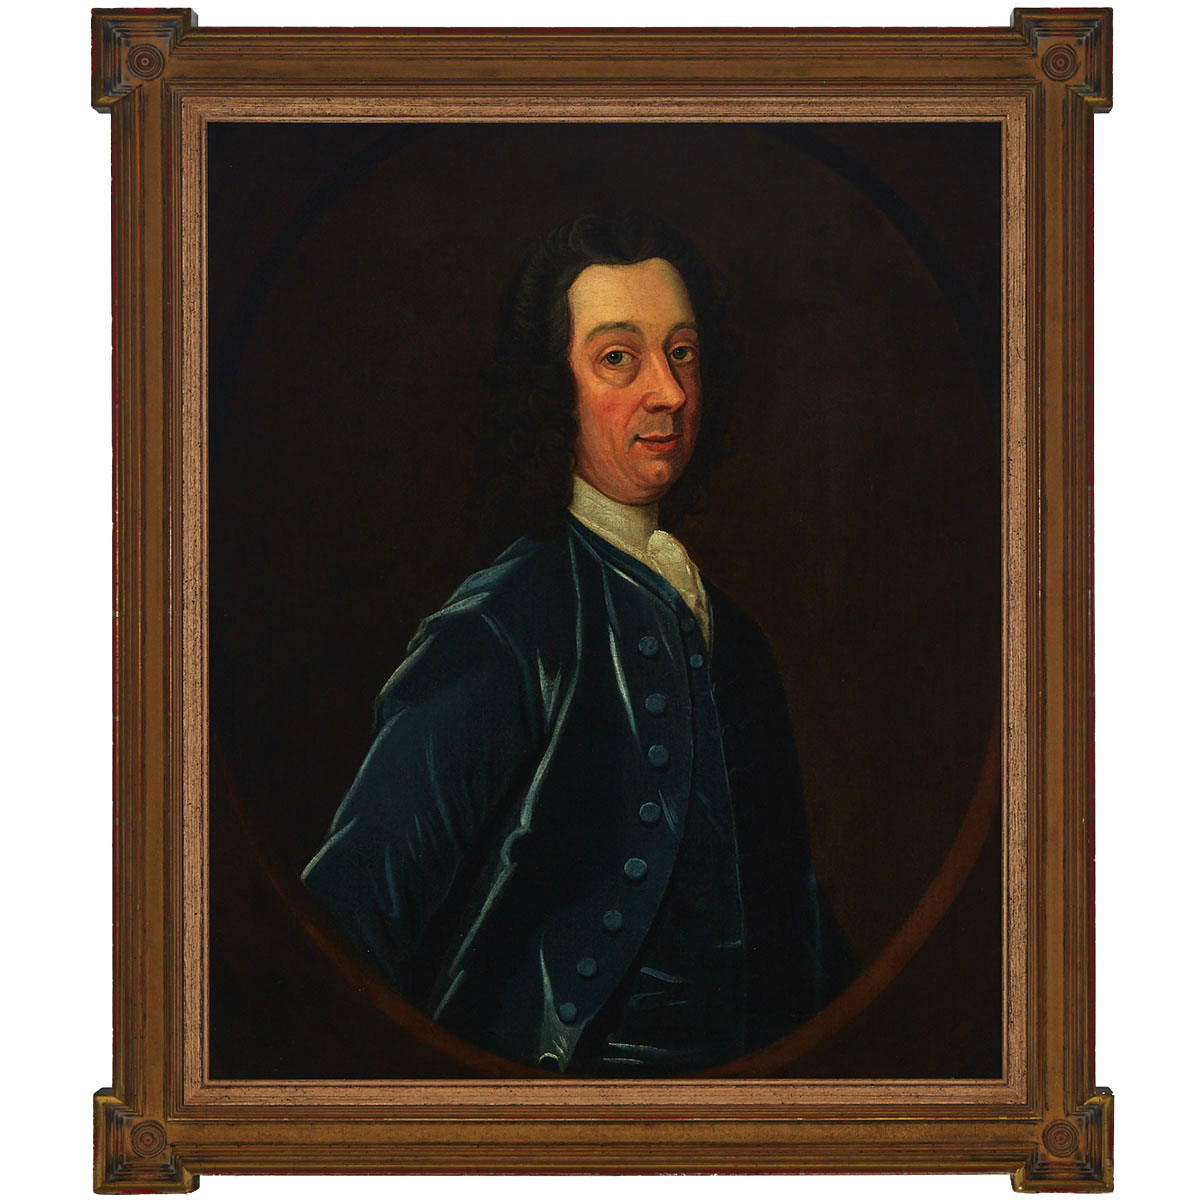 Manner of Michael Dahl (1659-1743)